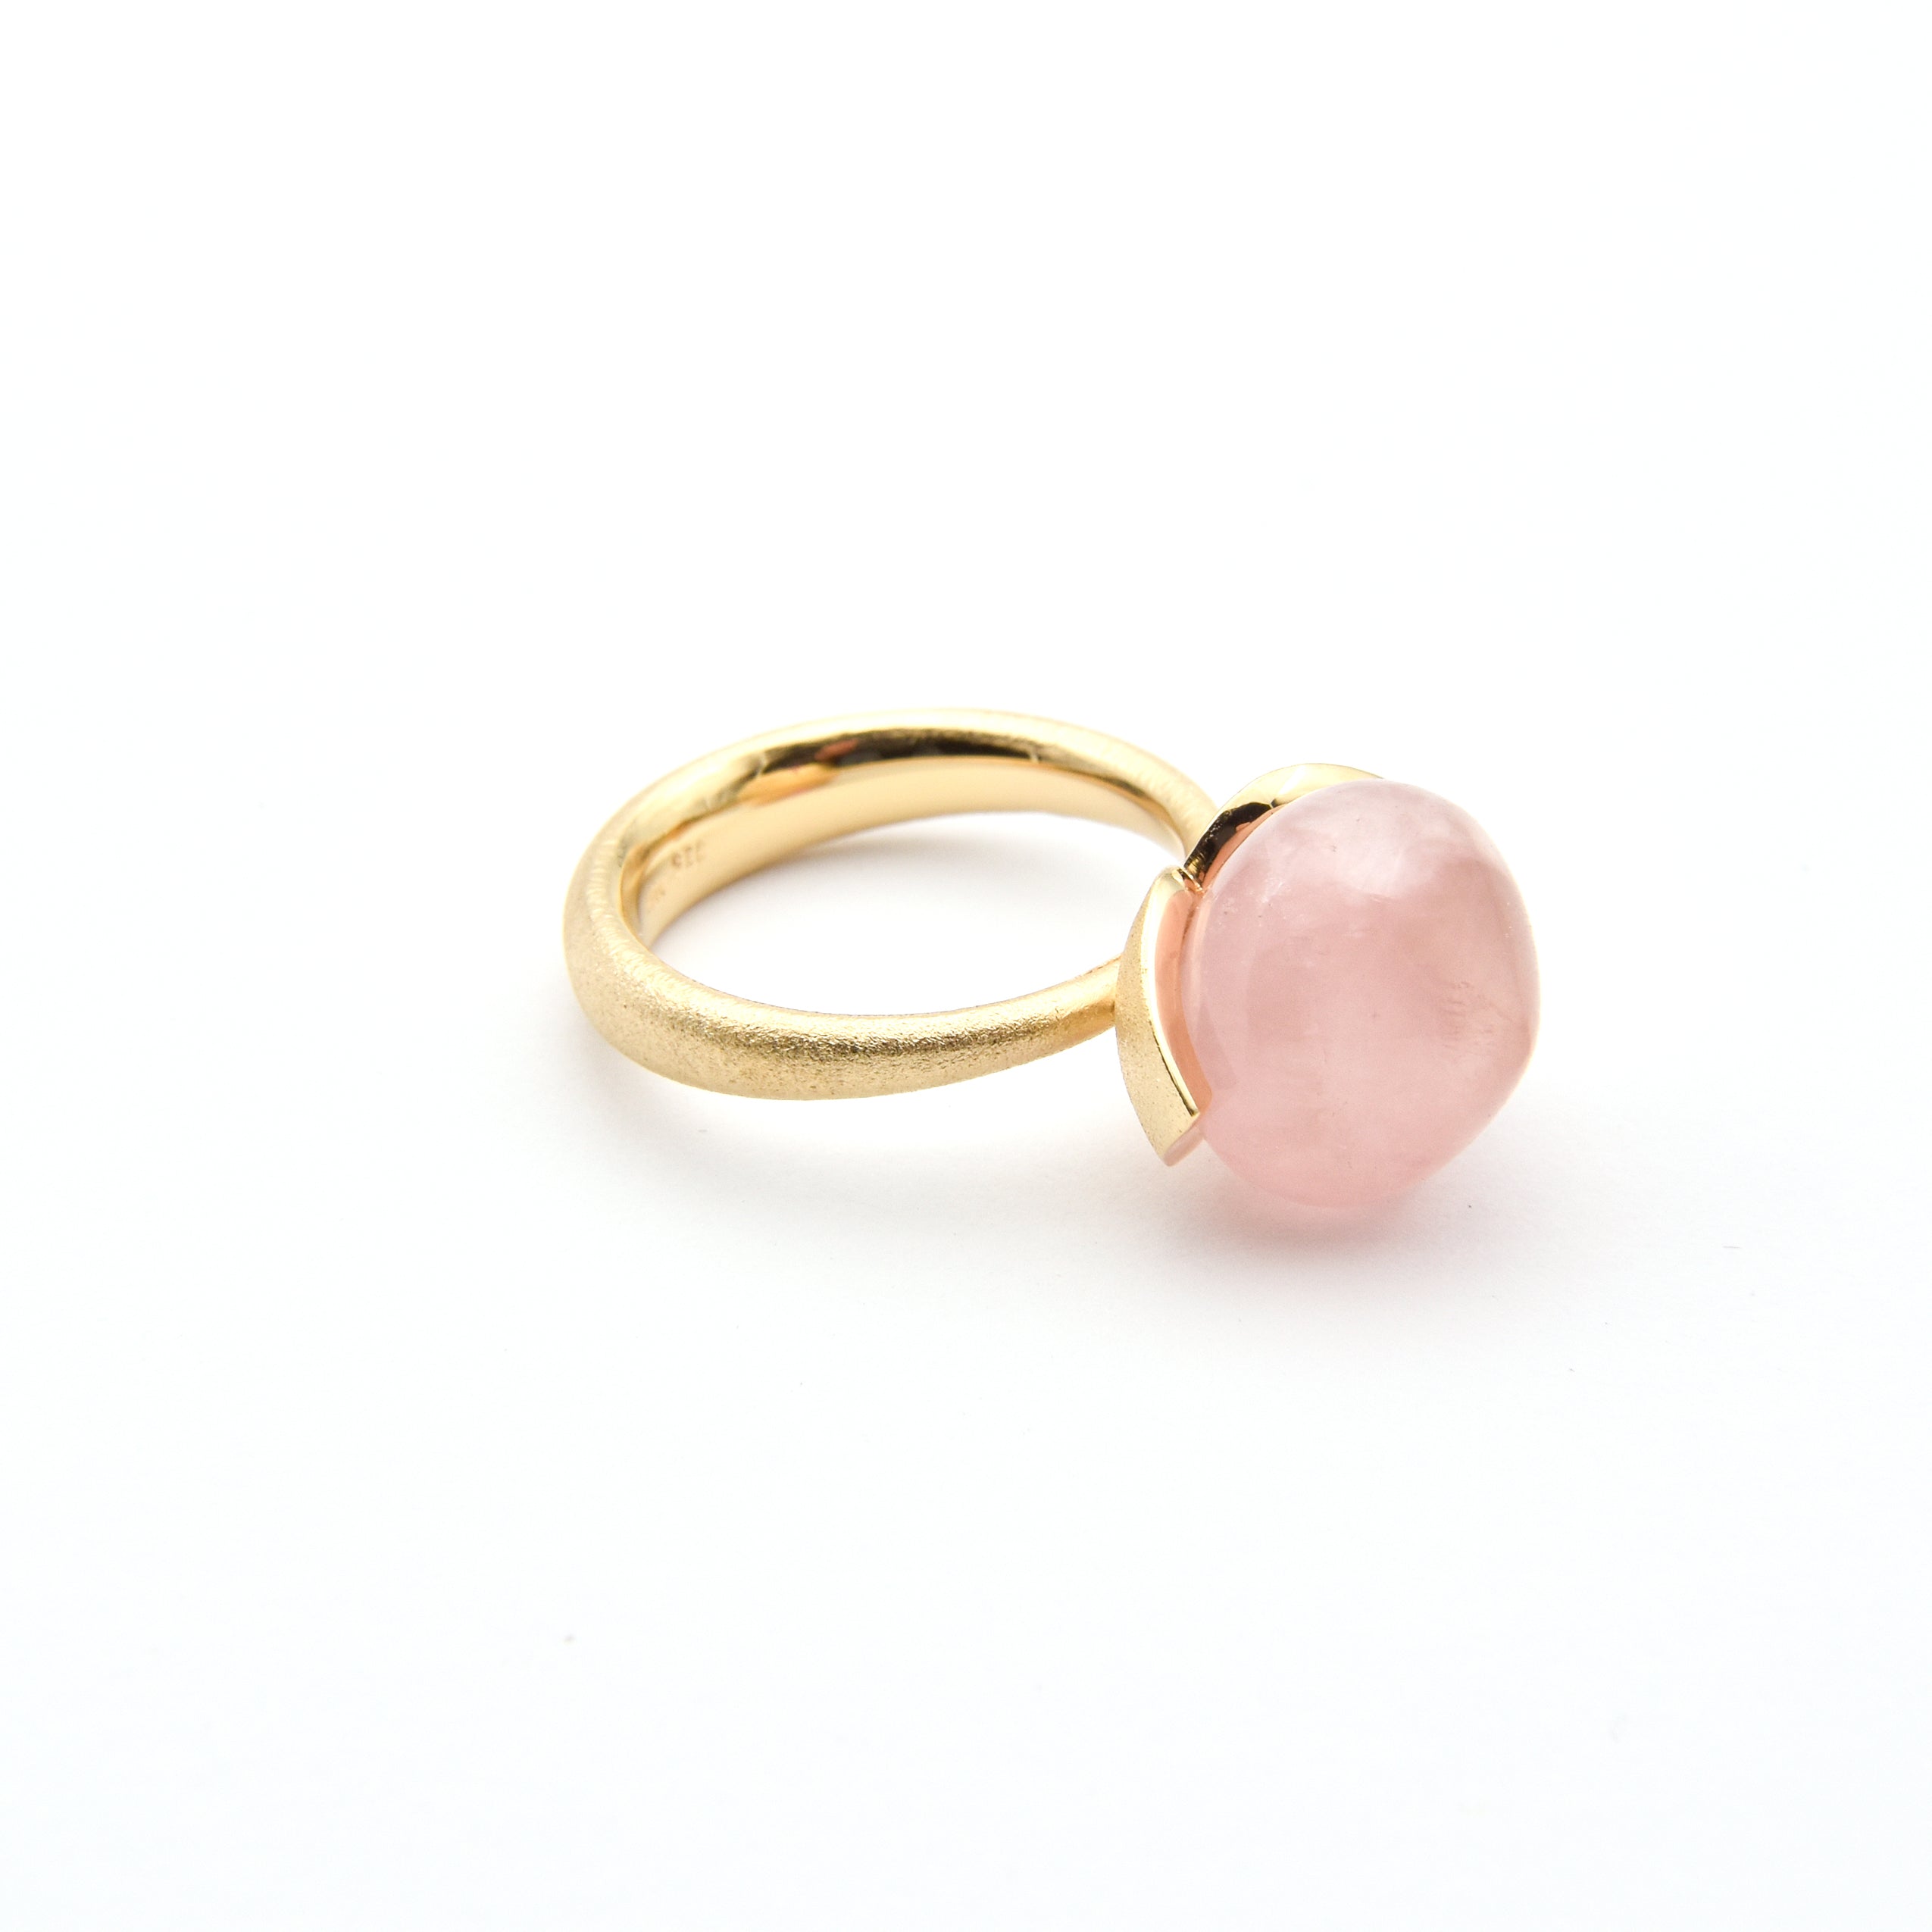 Dolce ring "big" with rose quartz 925/-